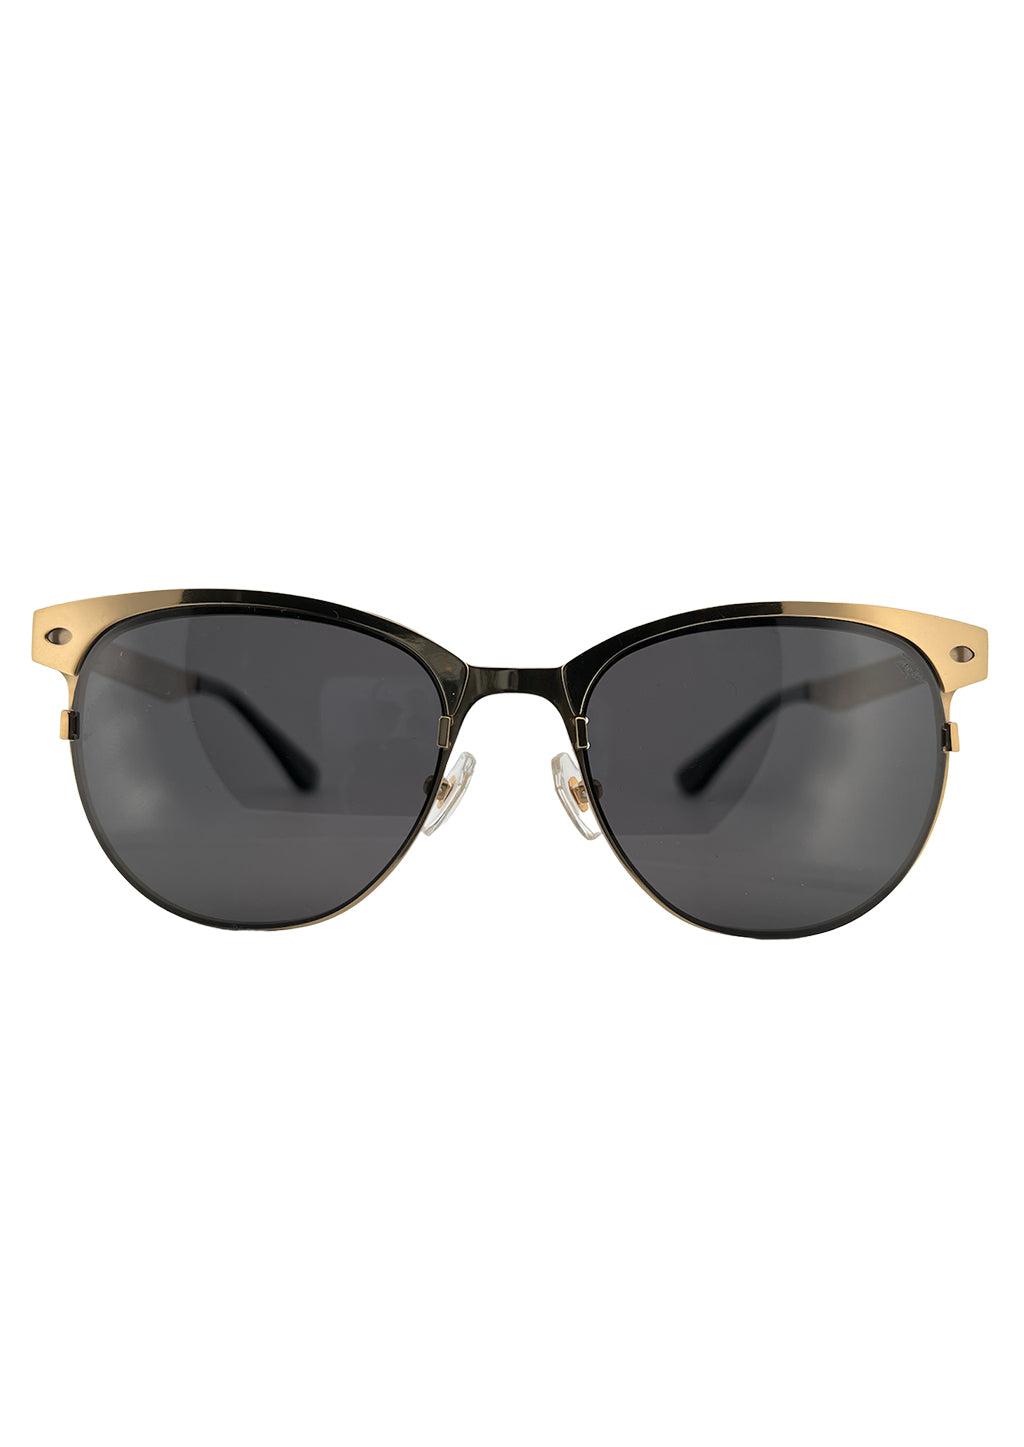 Titan - Titanium Clubmaster Gold Plated Sunglasses V2 - Front photo from studio shoot.